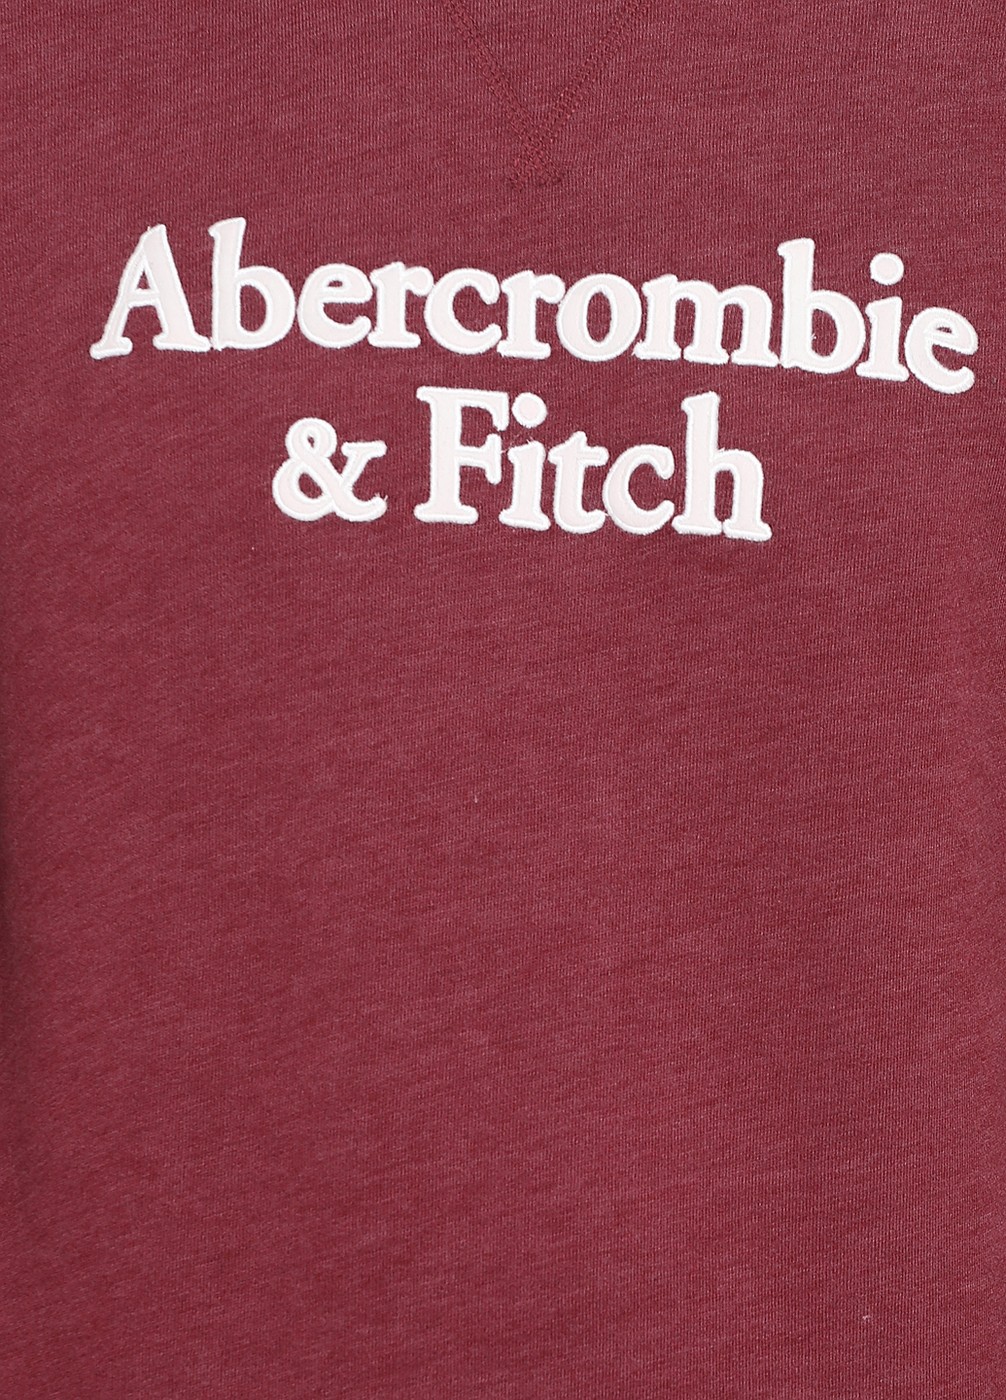 Свитшот мужской - свитшот Abercrombie & Fitch